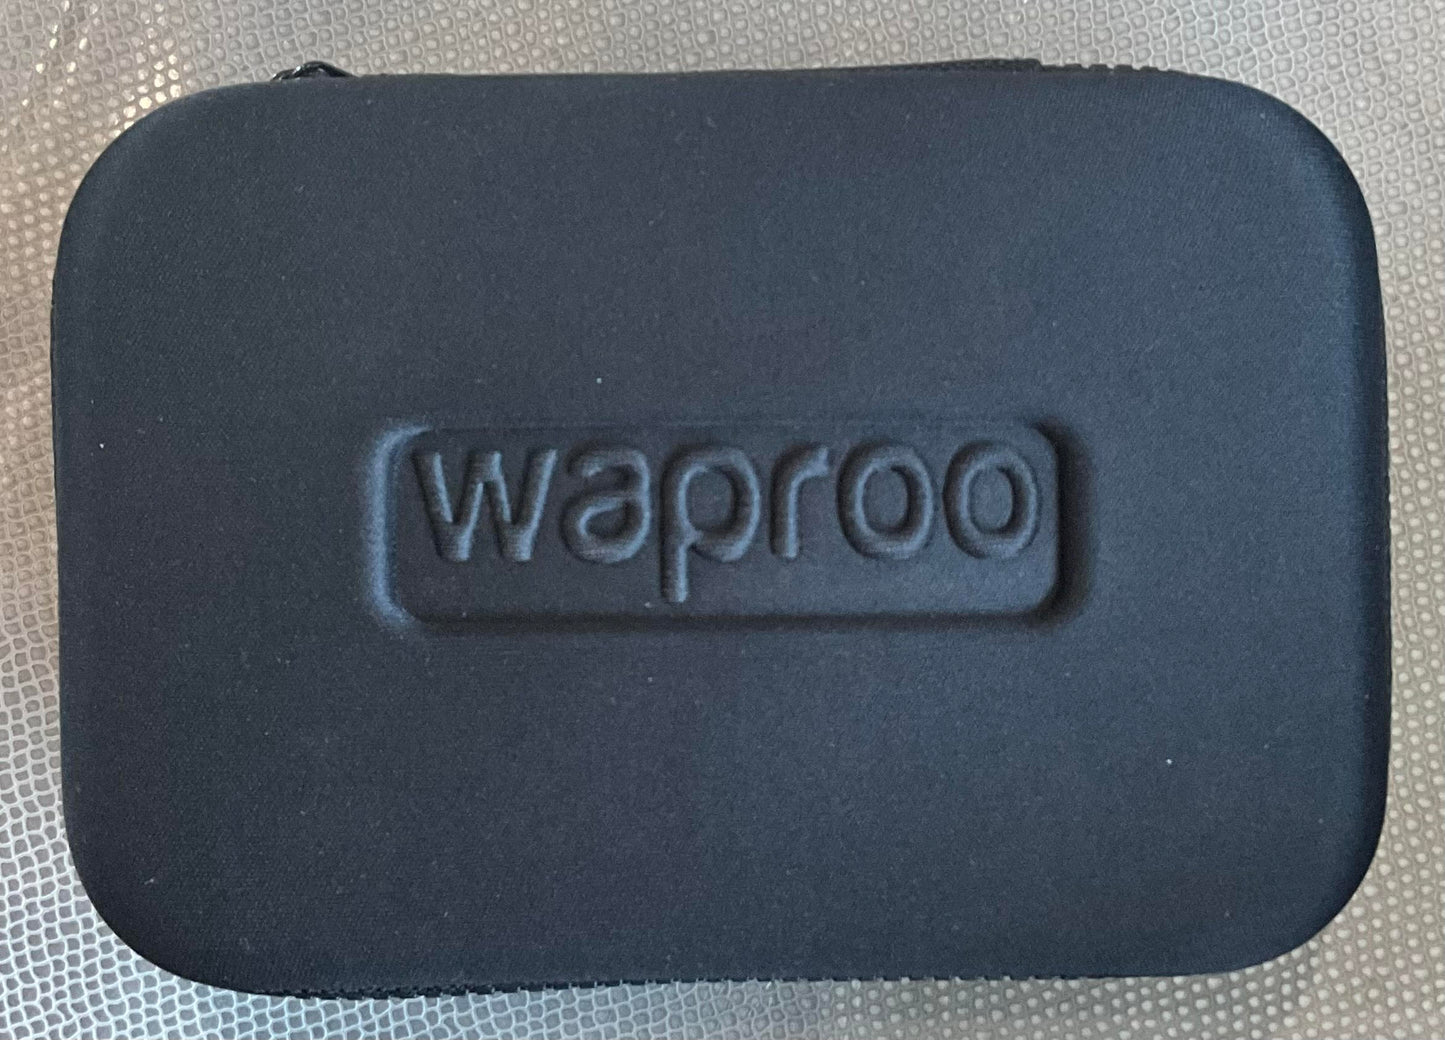 Waproo Shoe Care Kit - Hard Case